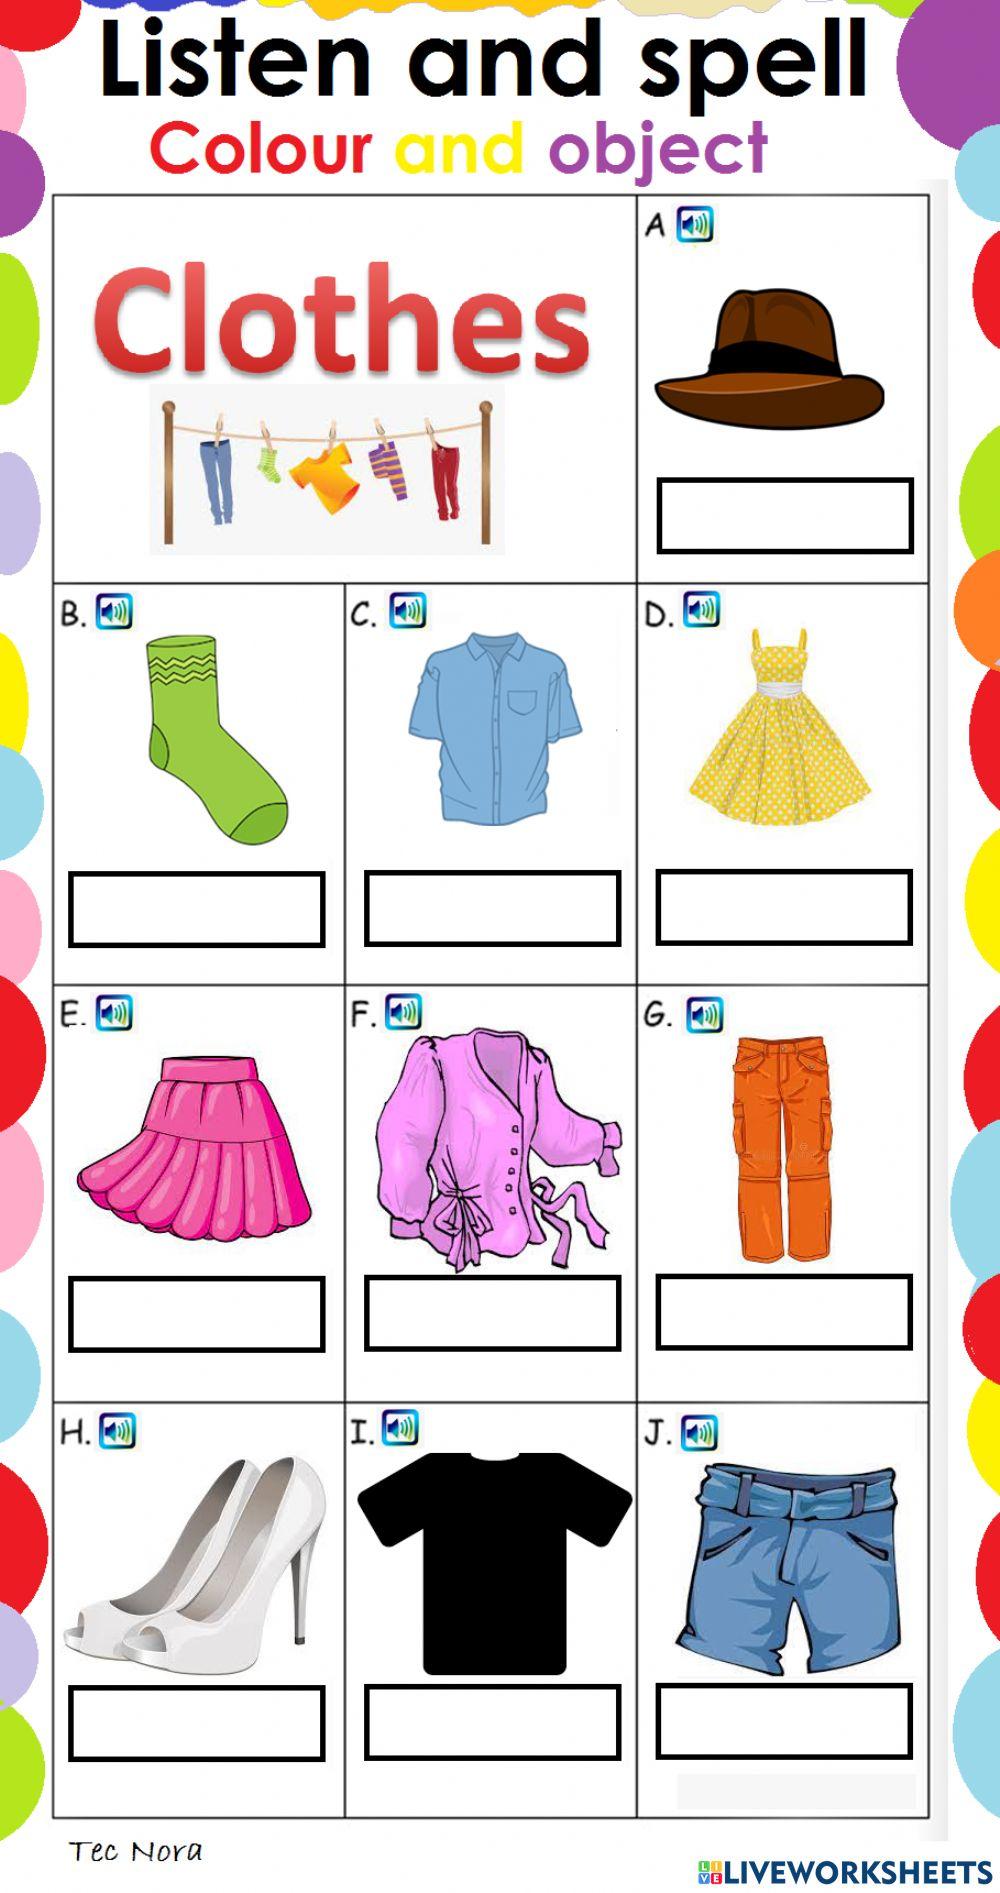 Clothes and Colour Vocabulary